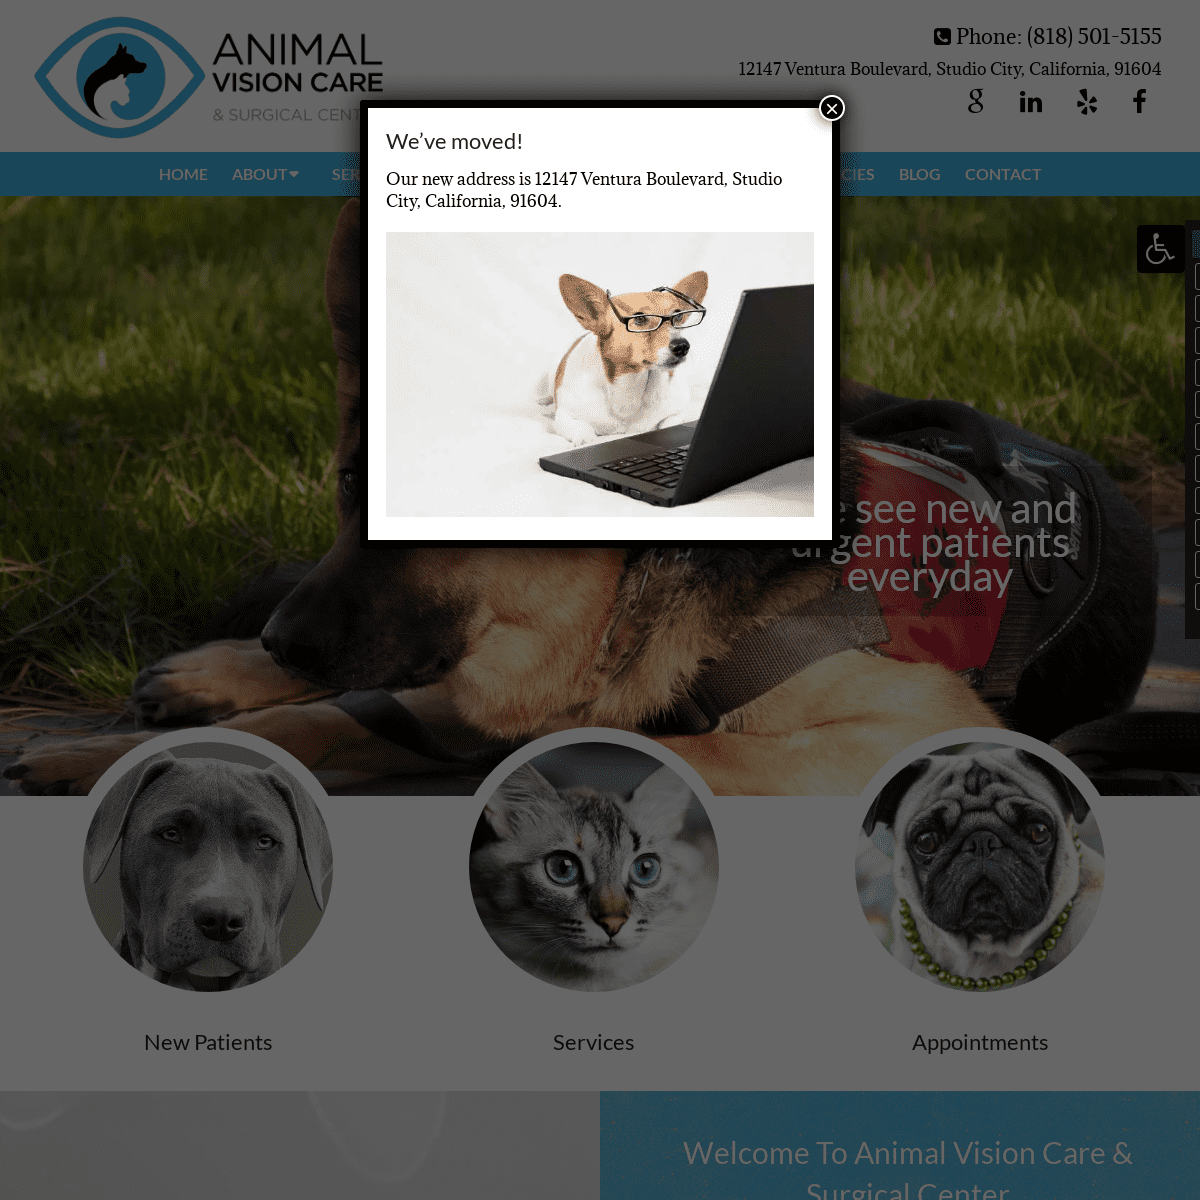 A complete backup of animalvisioncare.com